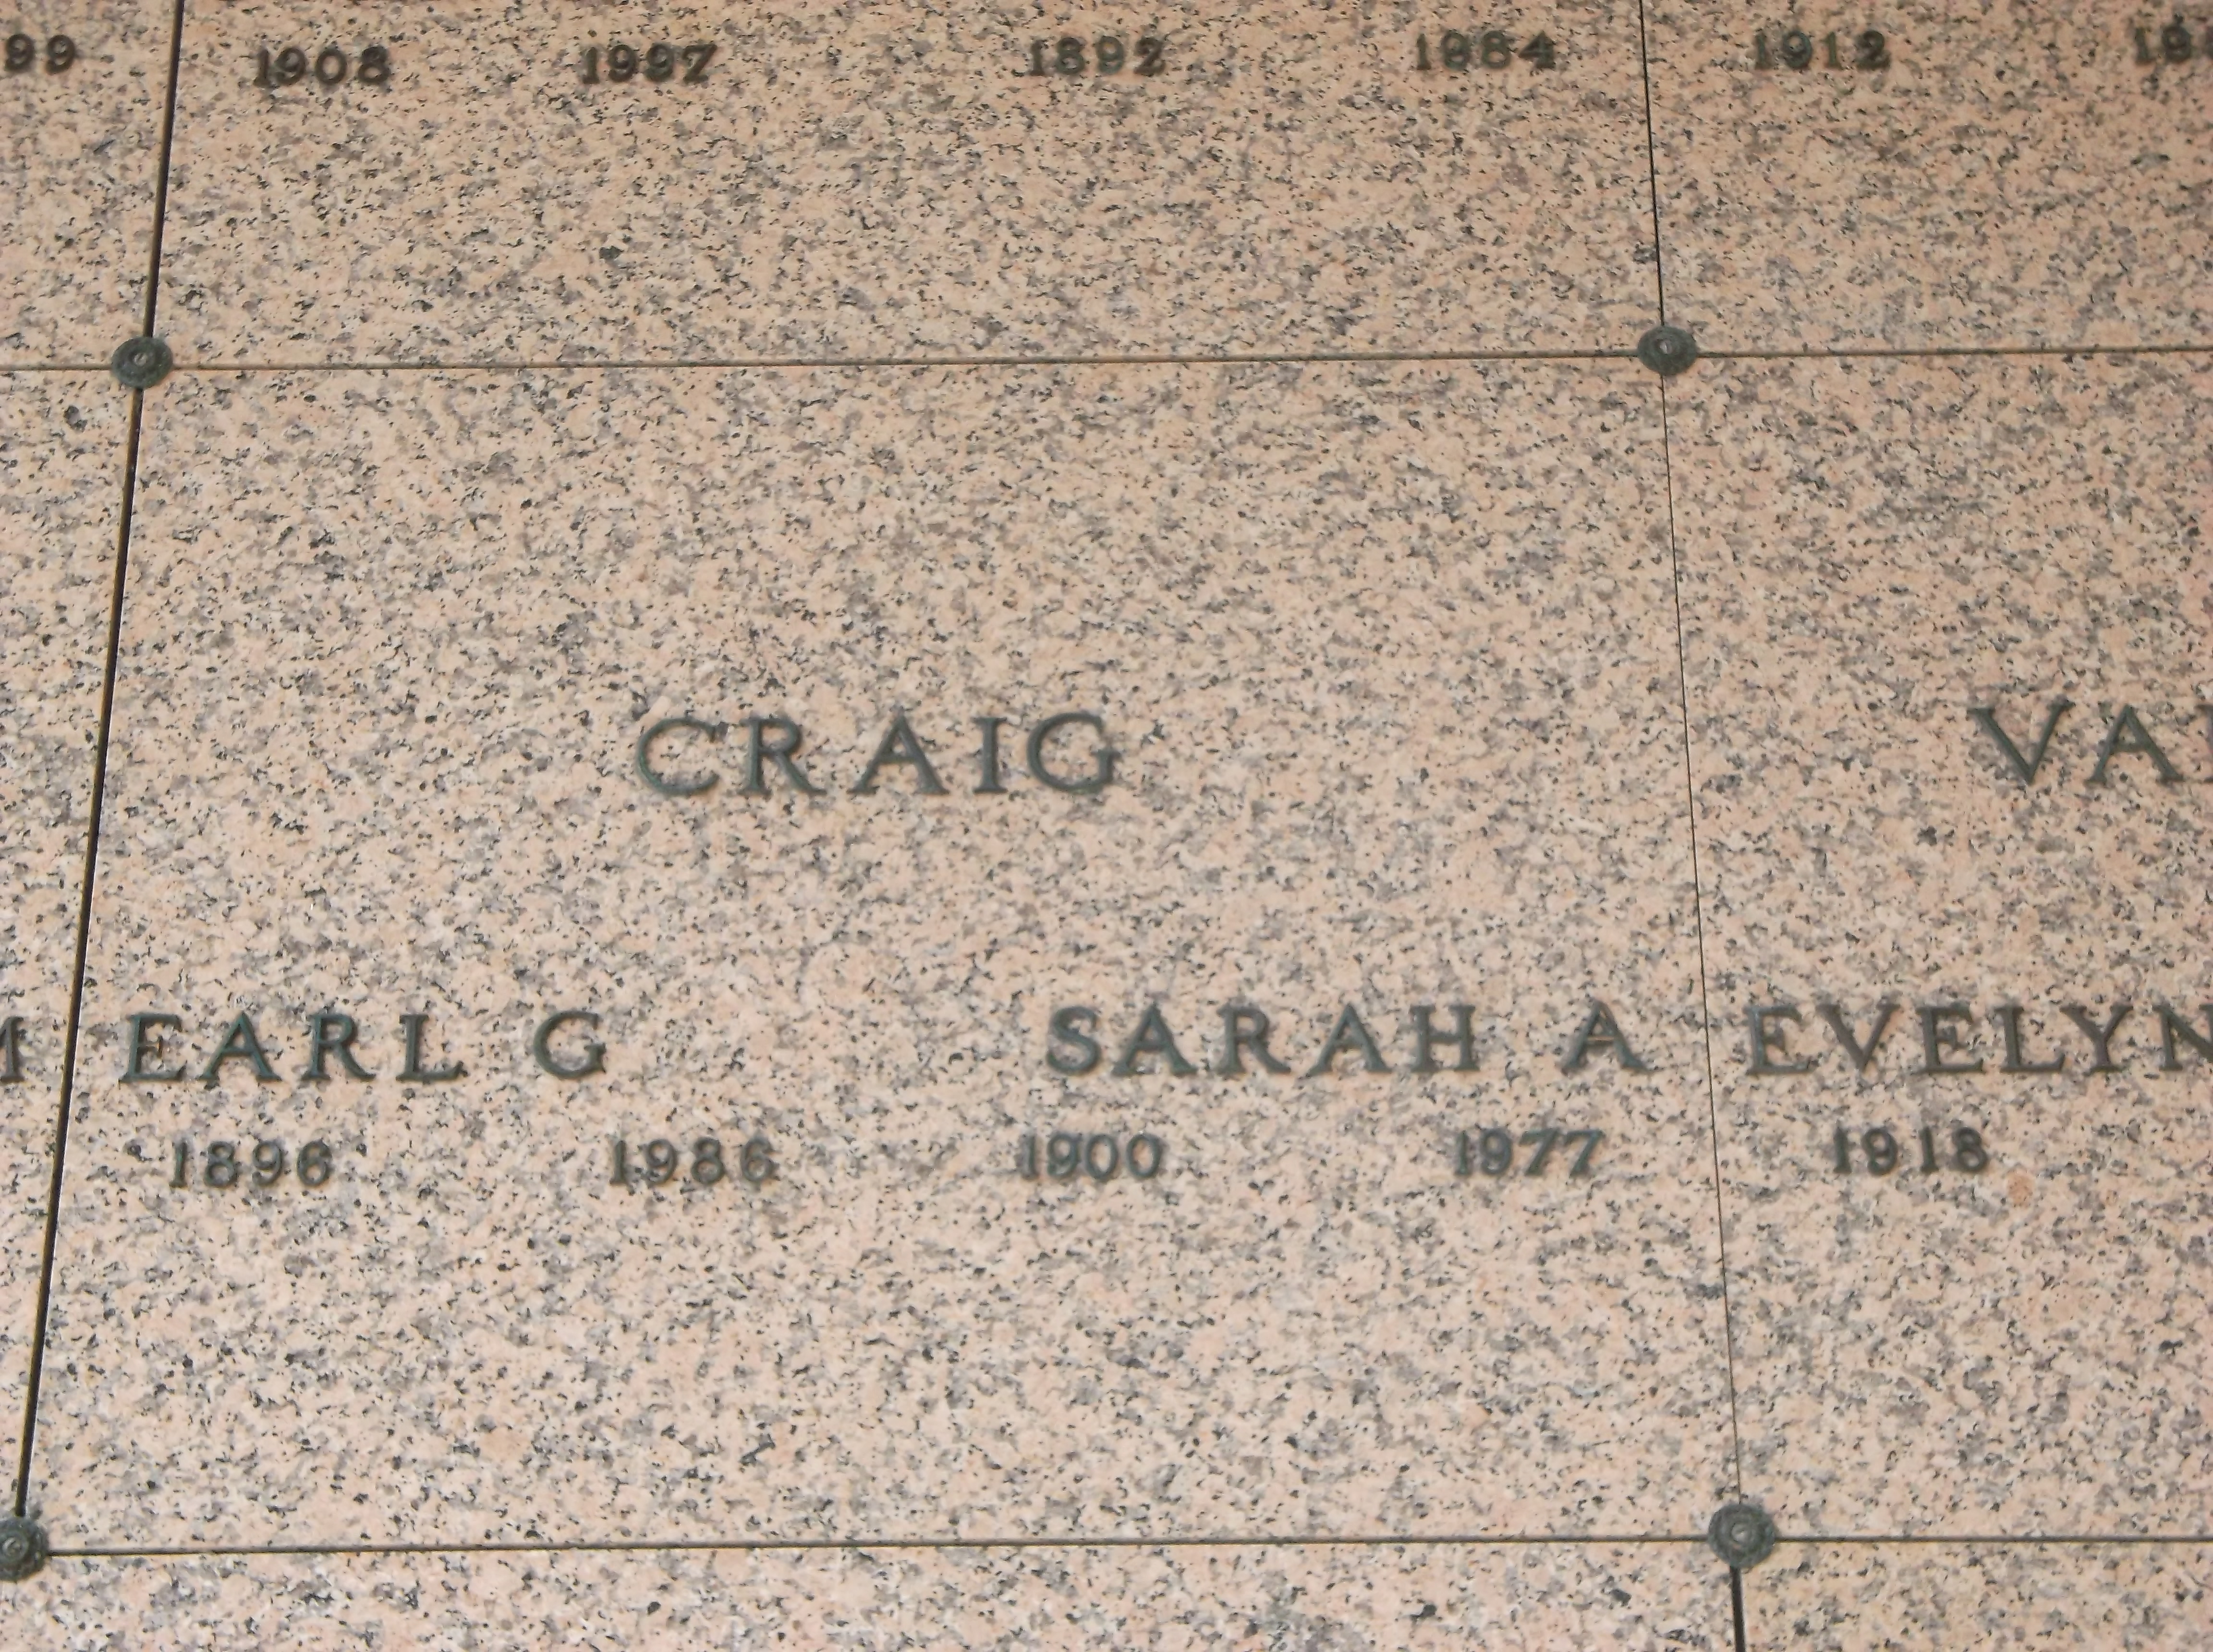 Earl G Craig